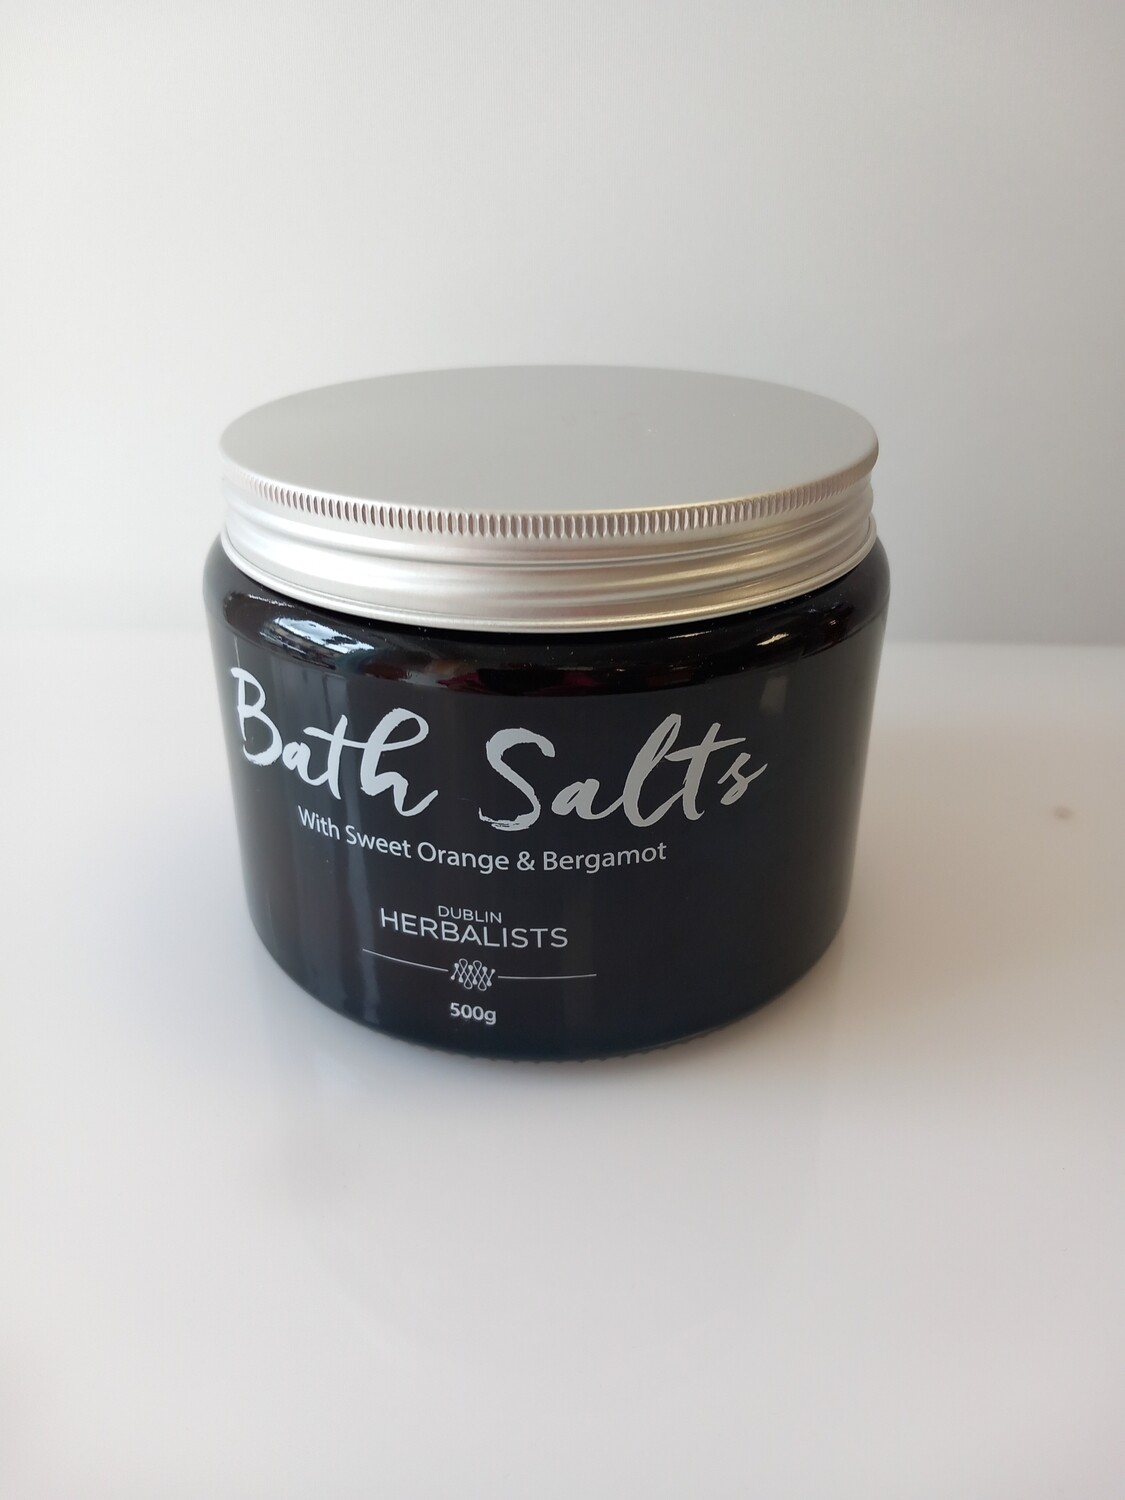 Dublin Herbalists - Bath Salts